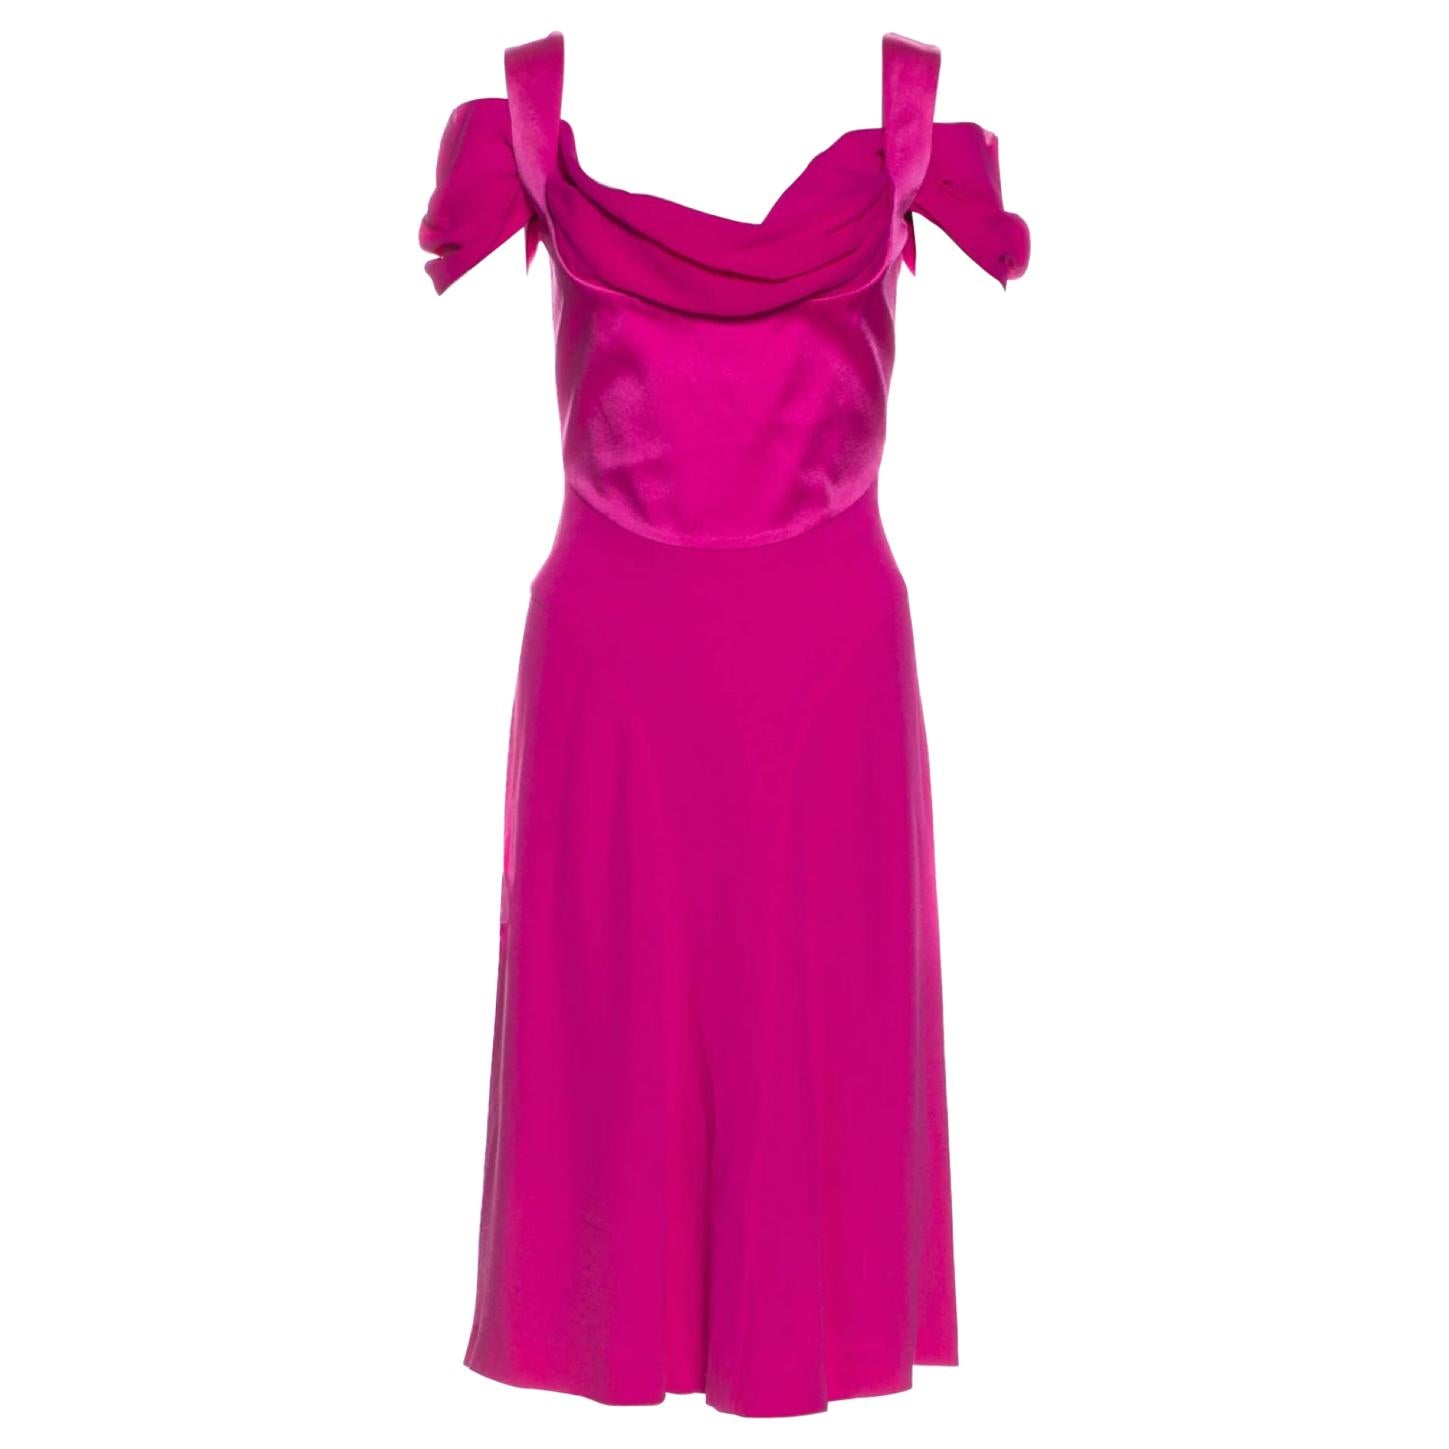 Vivienne Westwood Red Label Off the Shoulder Fuchsia Dress (40)